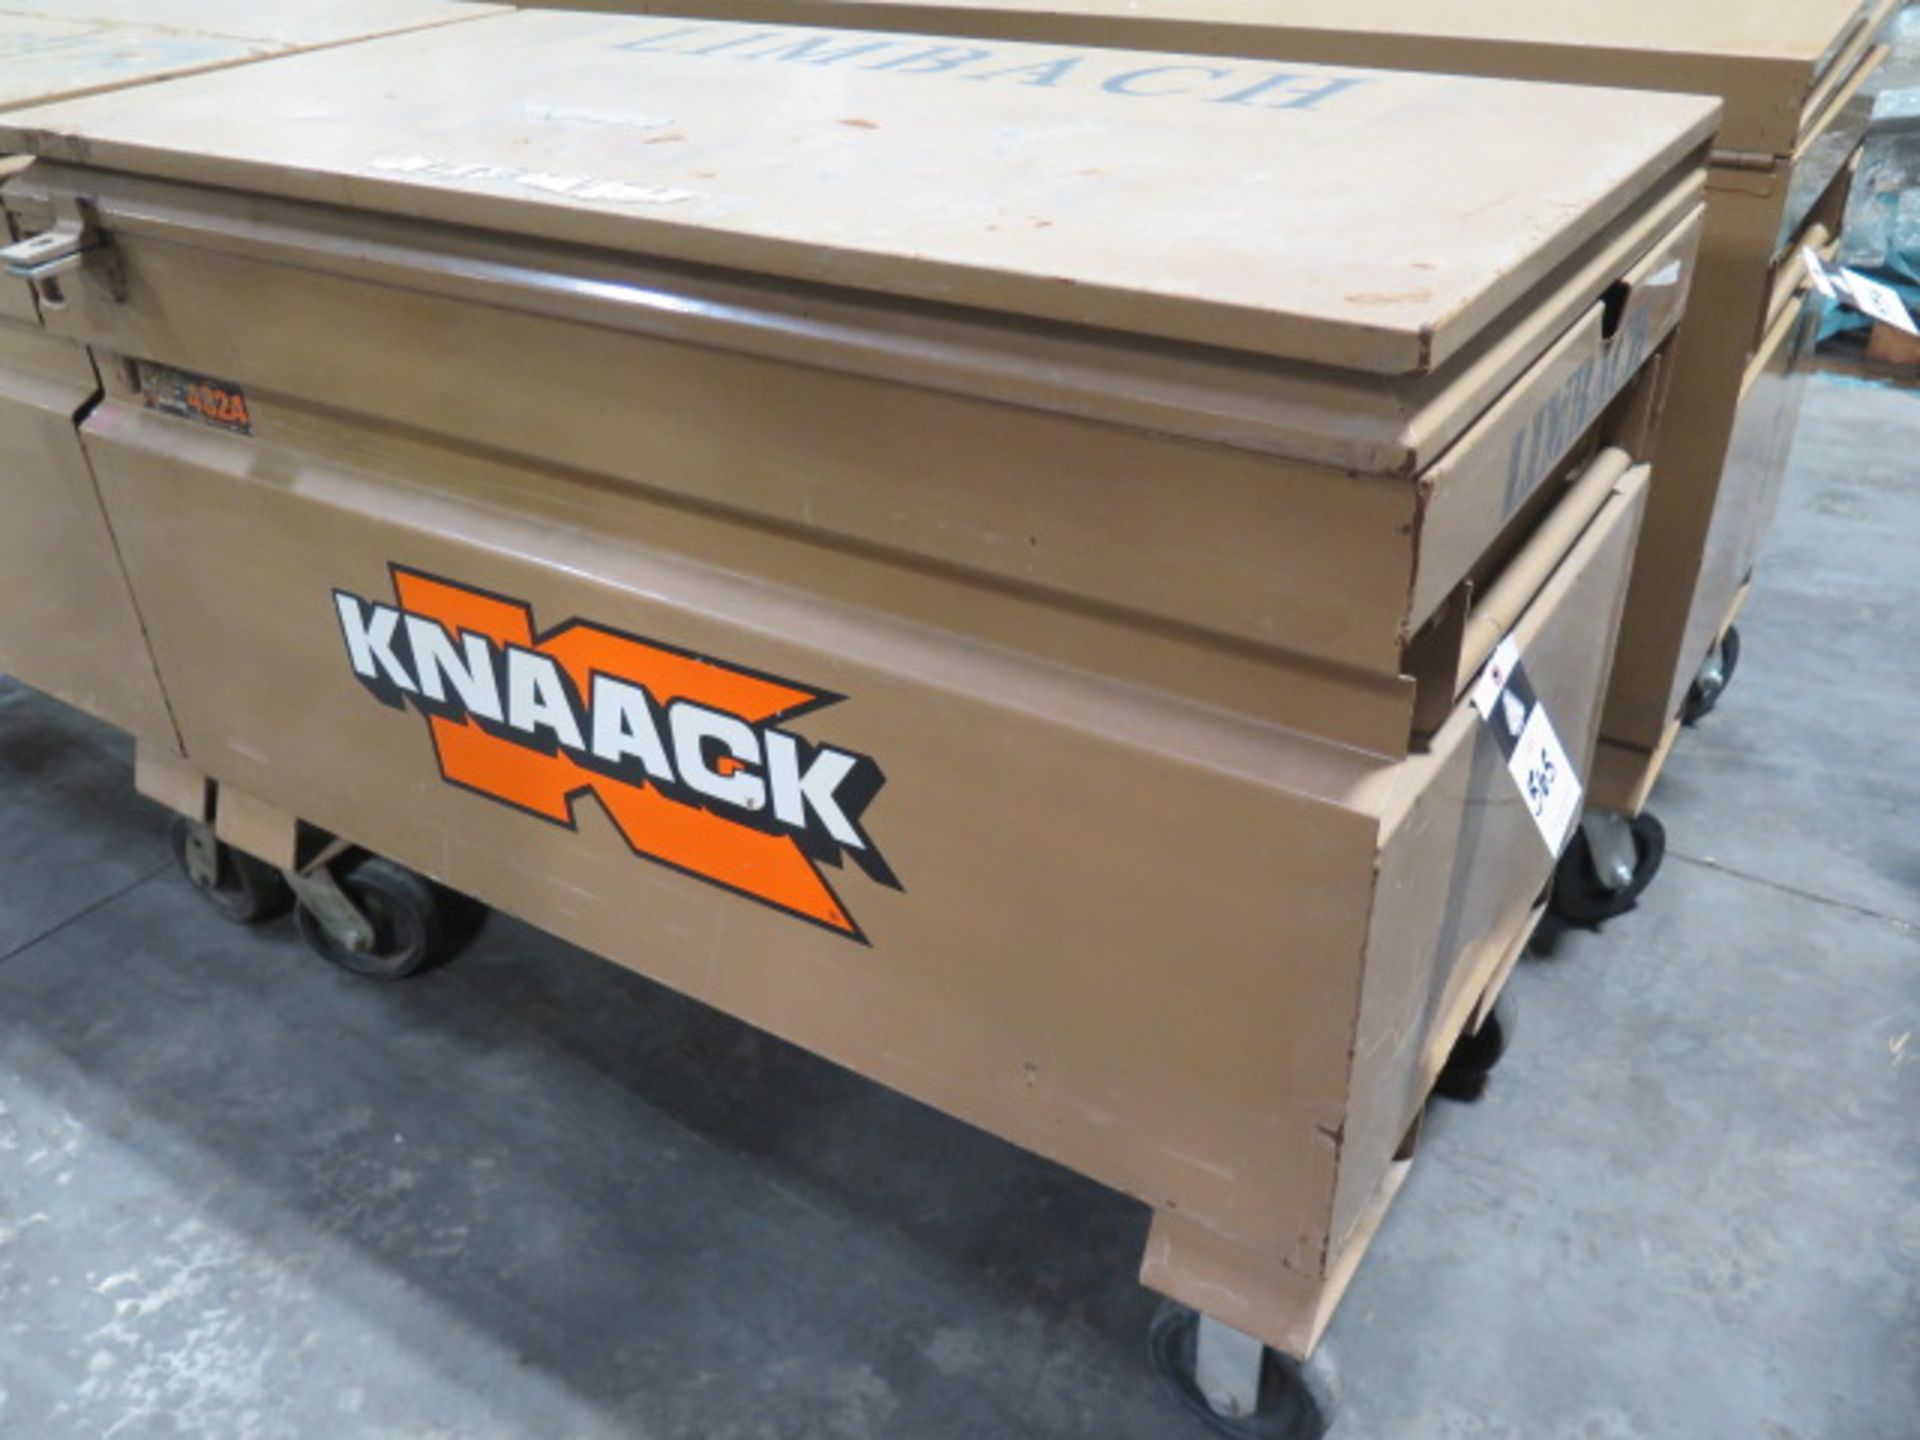 Knaack mdl. 4824 Rolling Job Box (SOLD AS-IS - NO WARRANTY) - Image 2 of 6